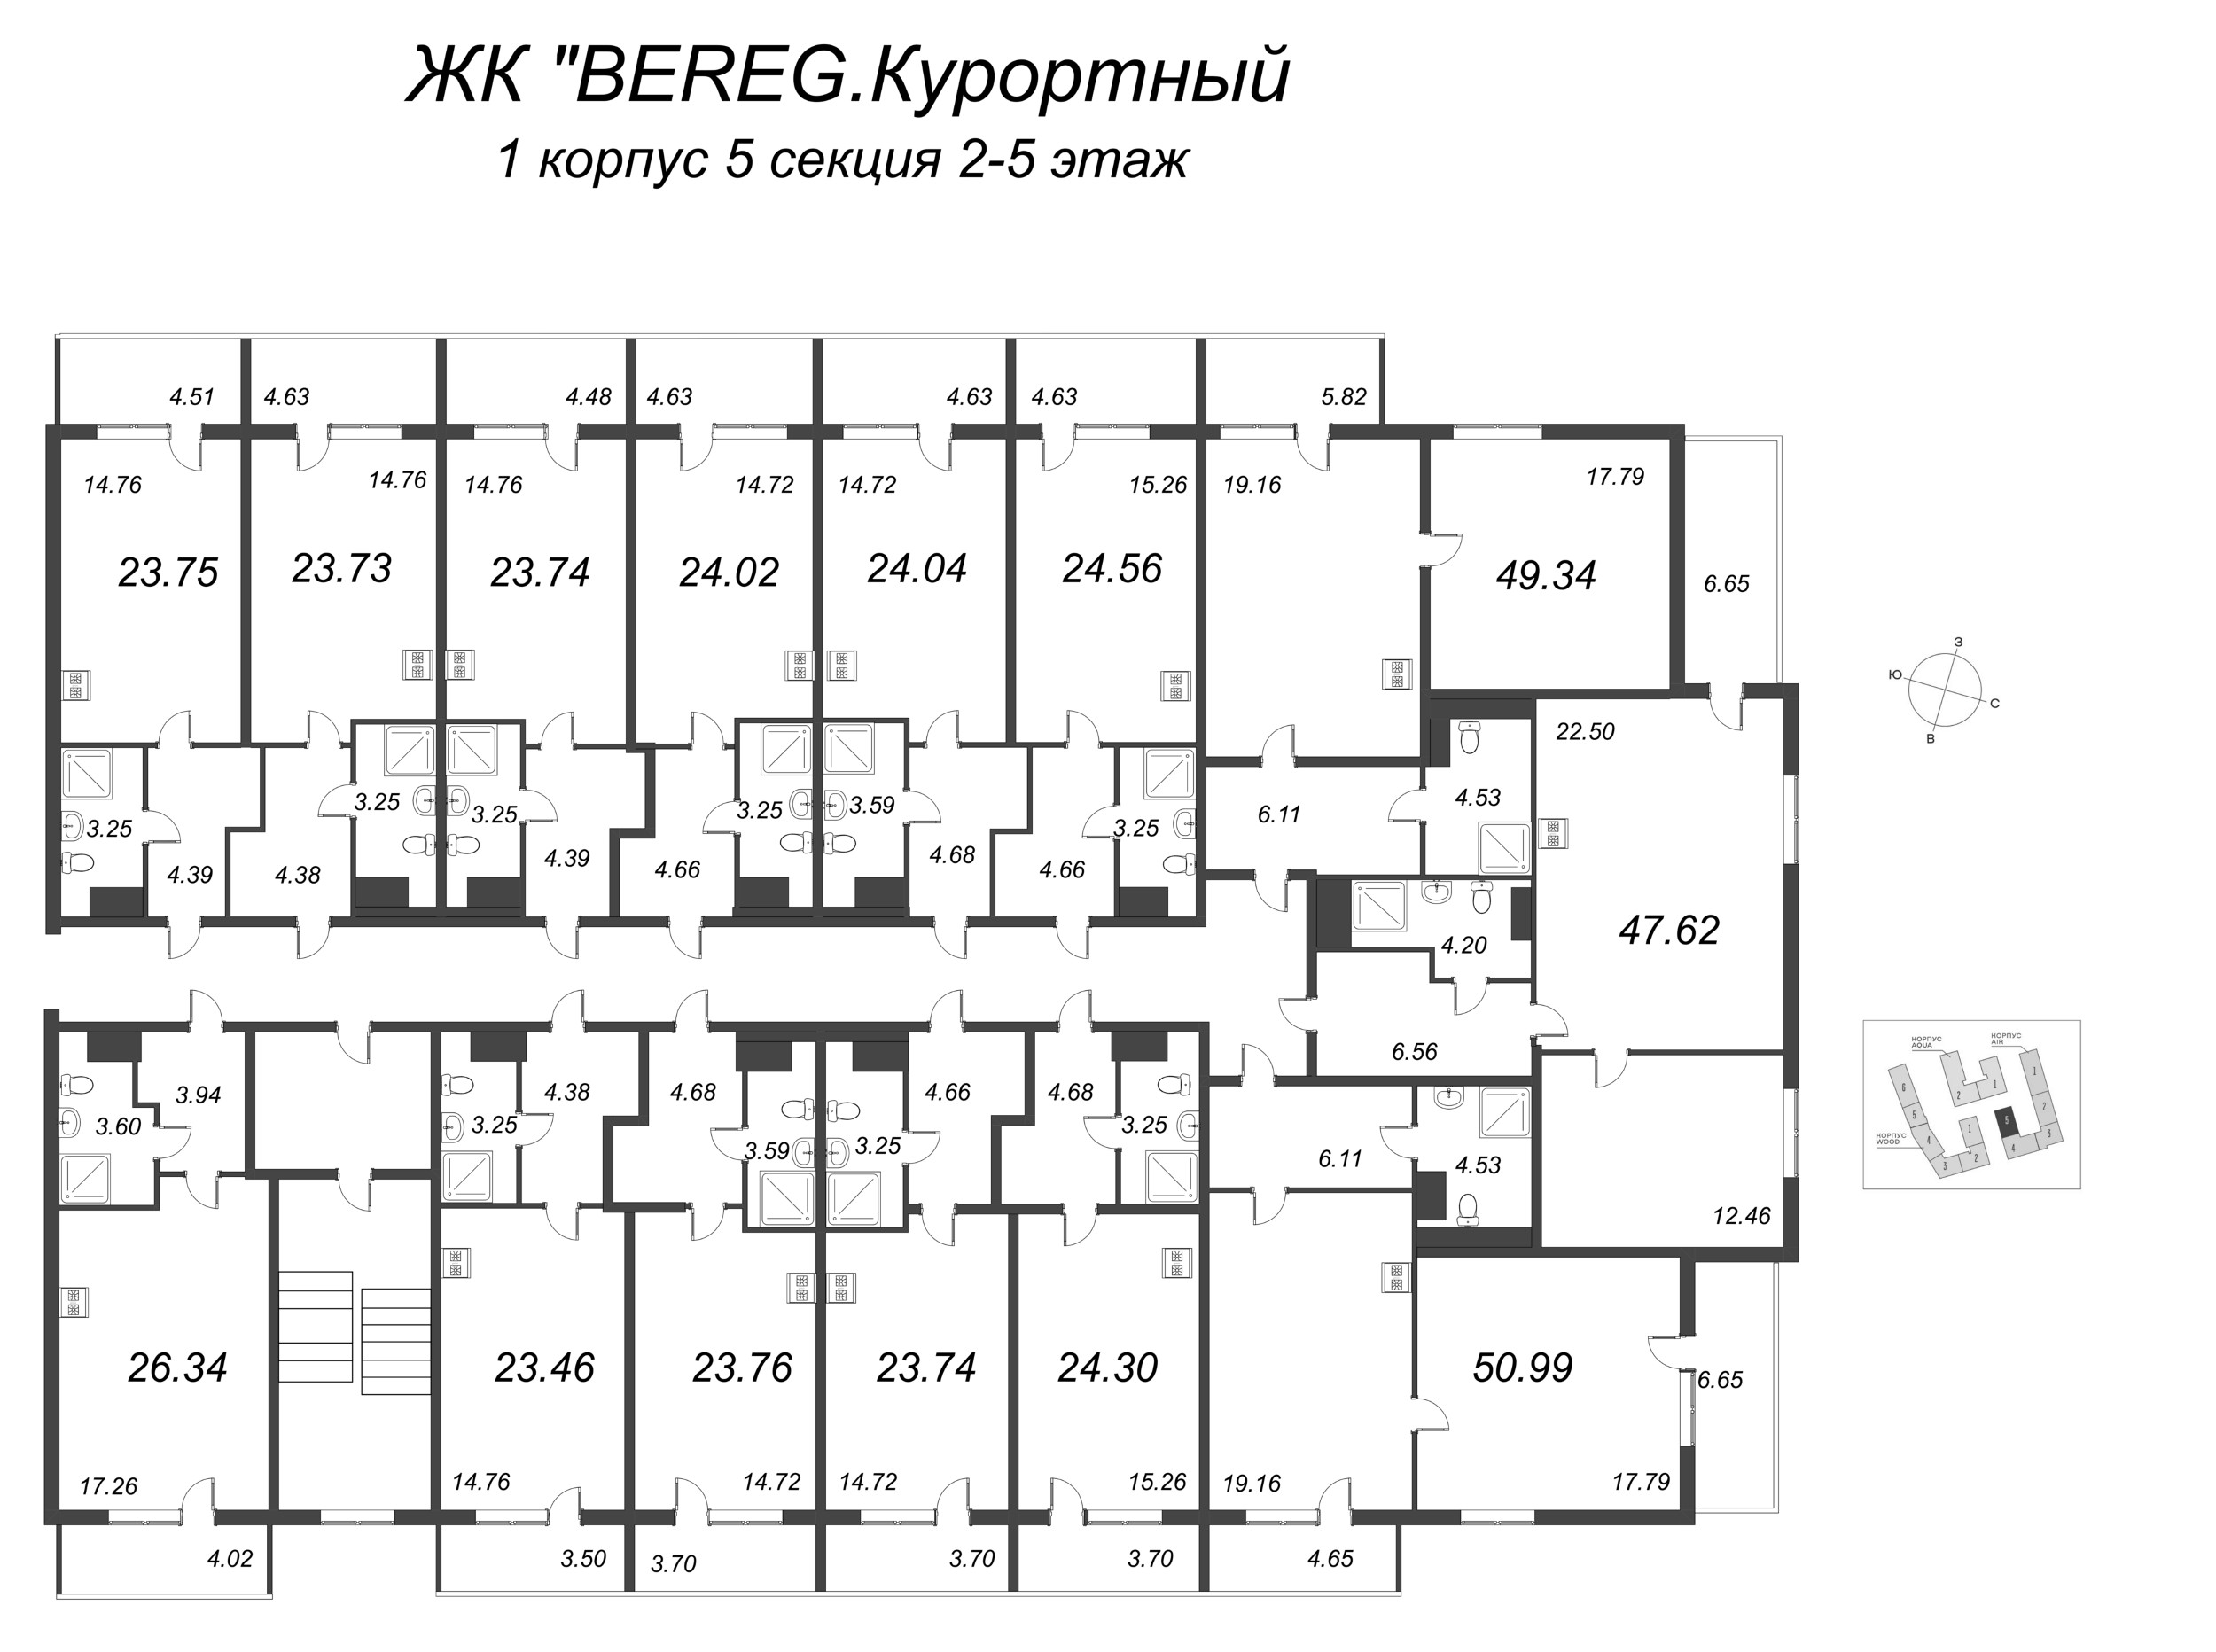 2-комнатная (Евро) квартира, 47.62 м² - планировка этажа